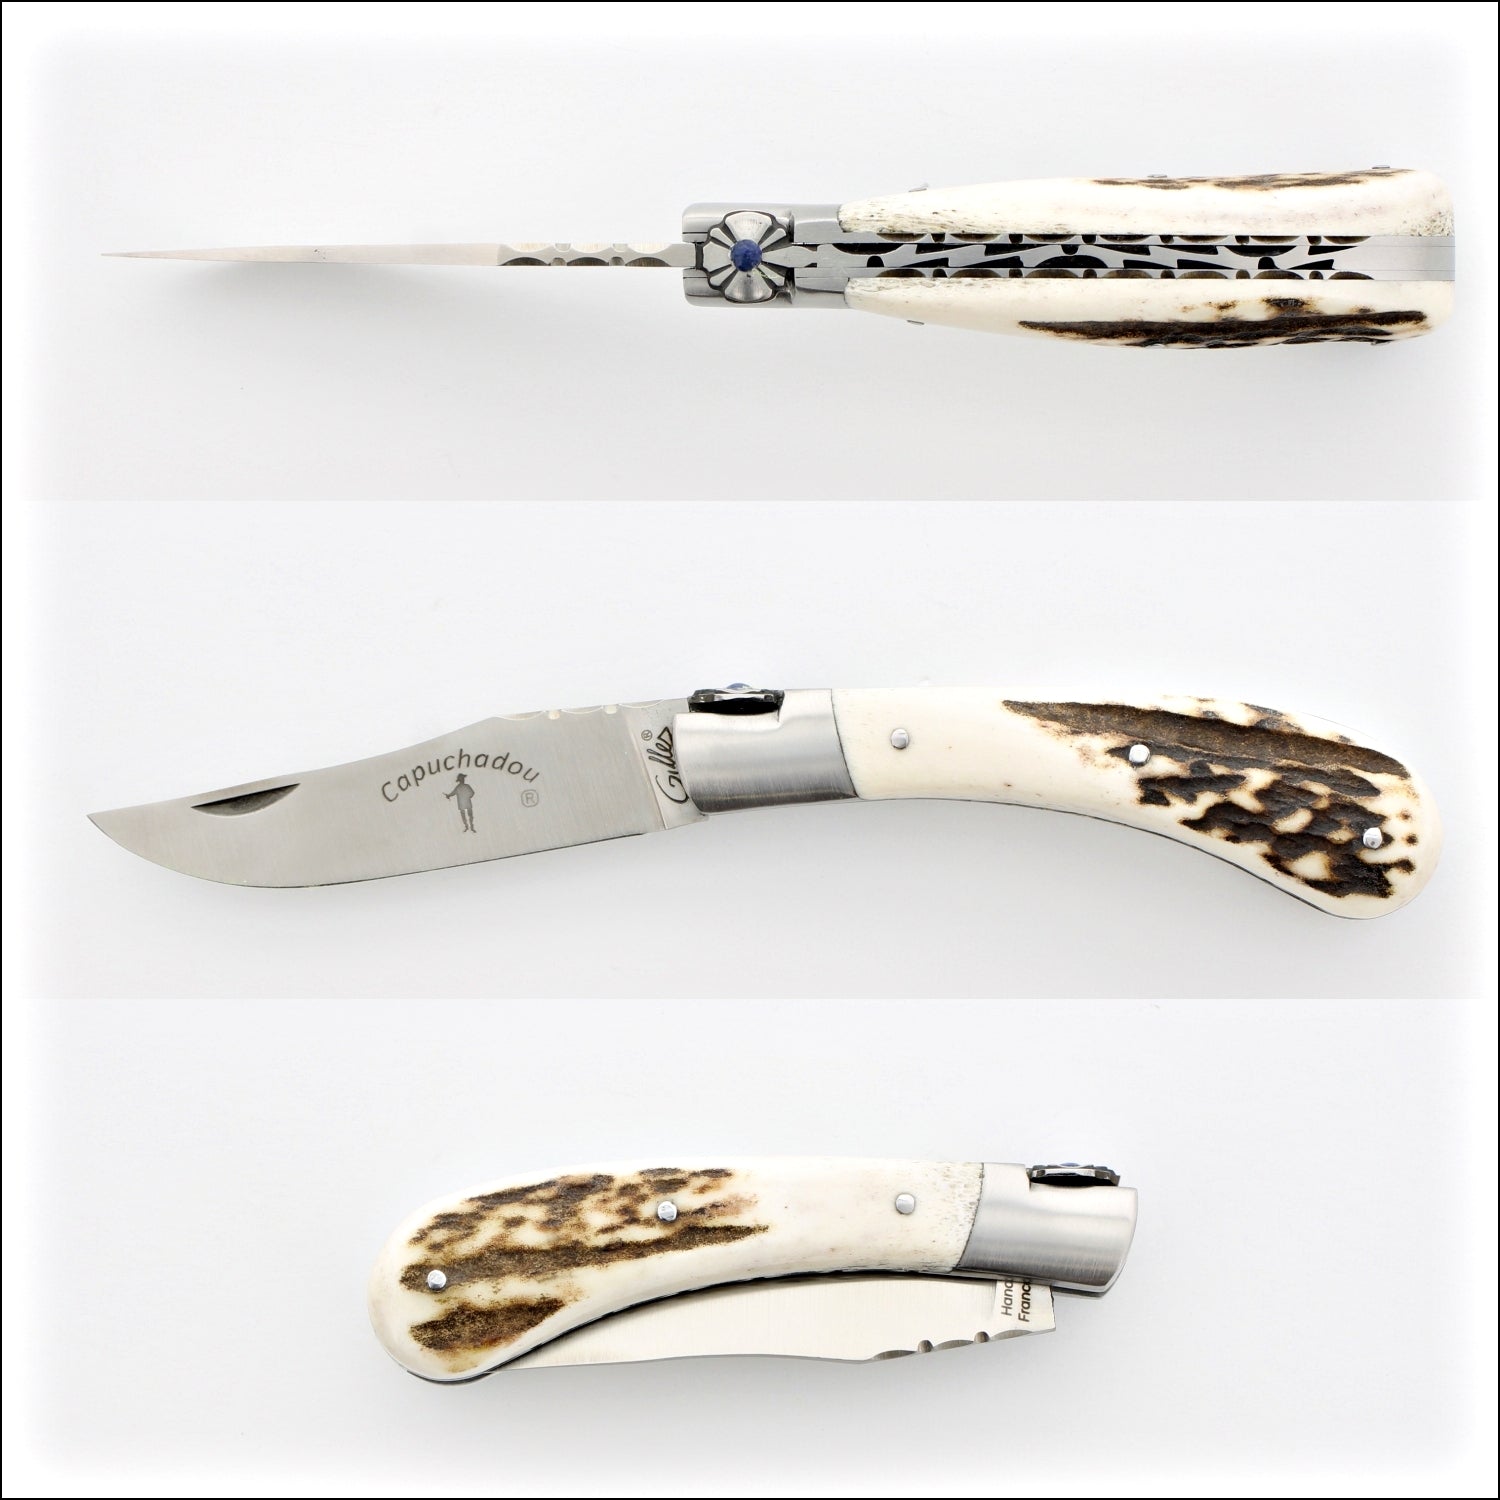 Capuchadou 10 cm Guilloche Folding Knife Deer Stag Handle